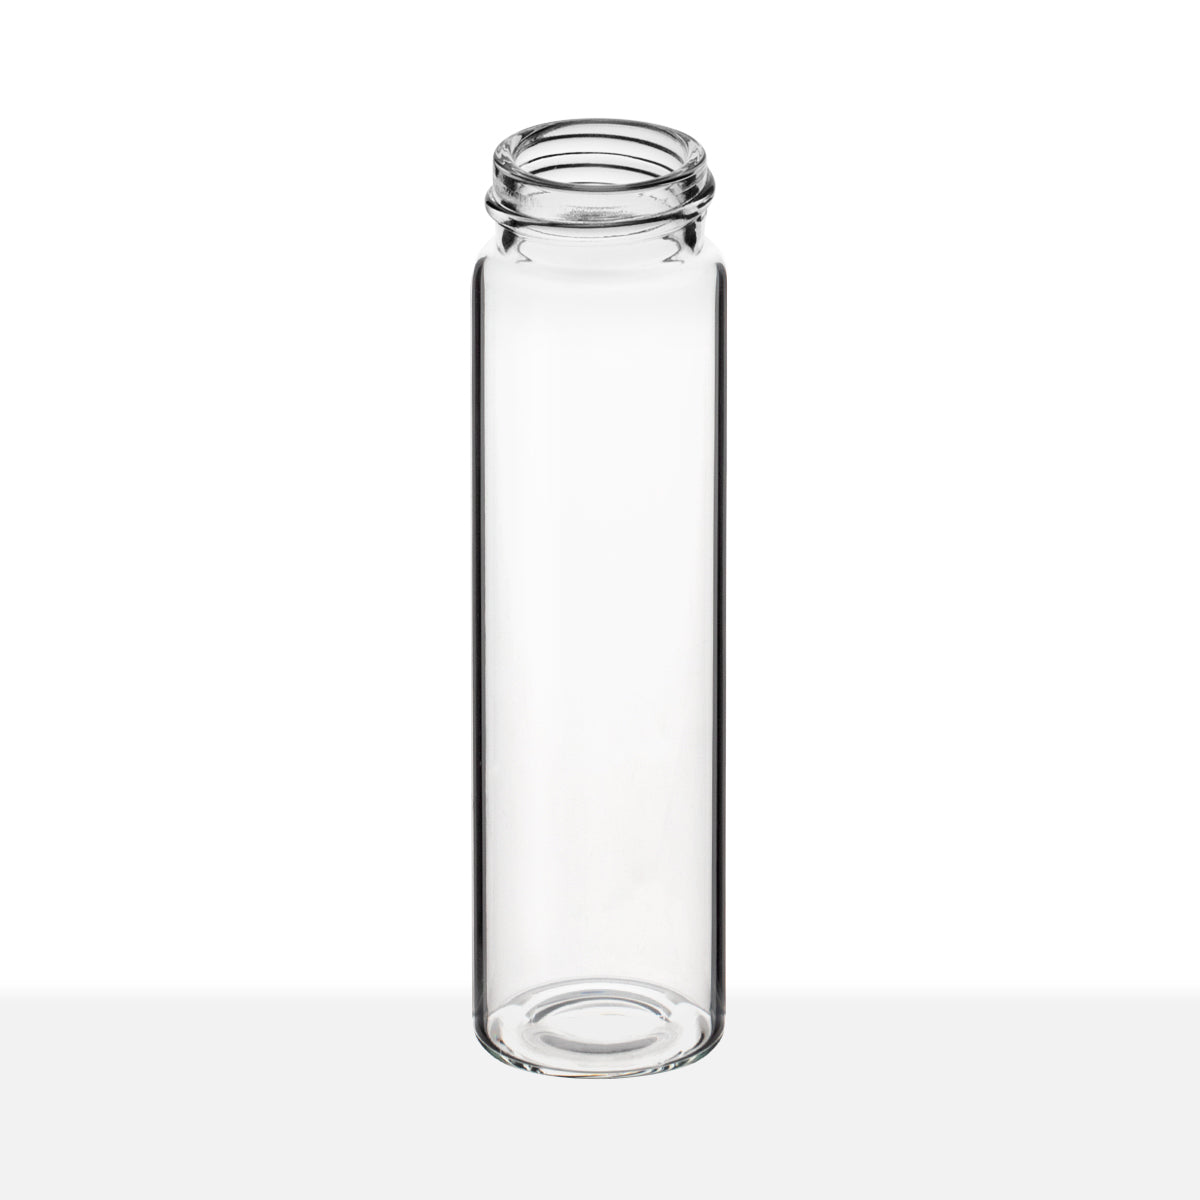 CAPSULE GLASS VIALS - CLEAR Item #:VC242795